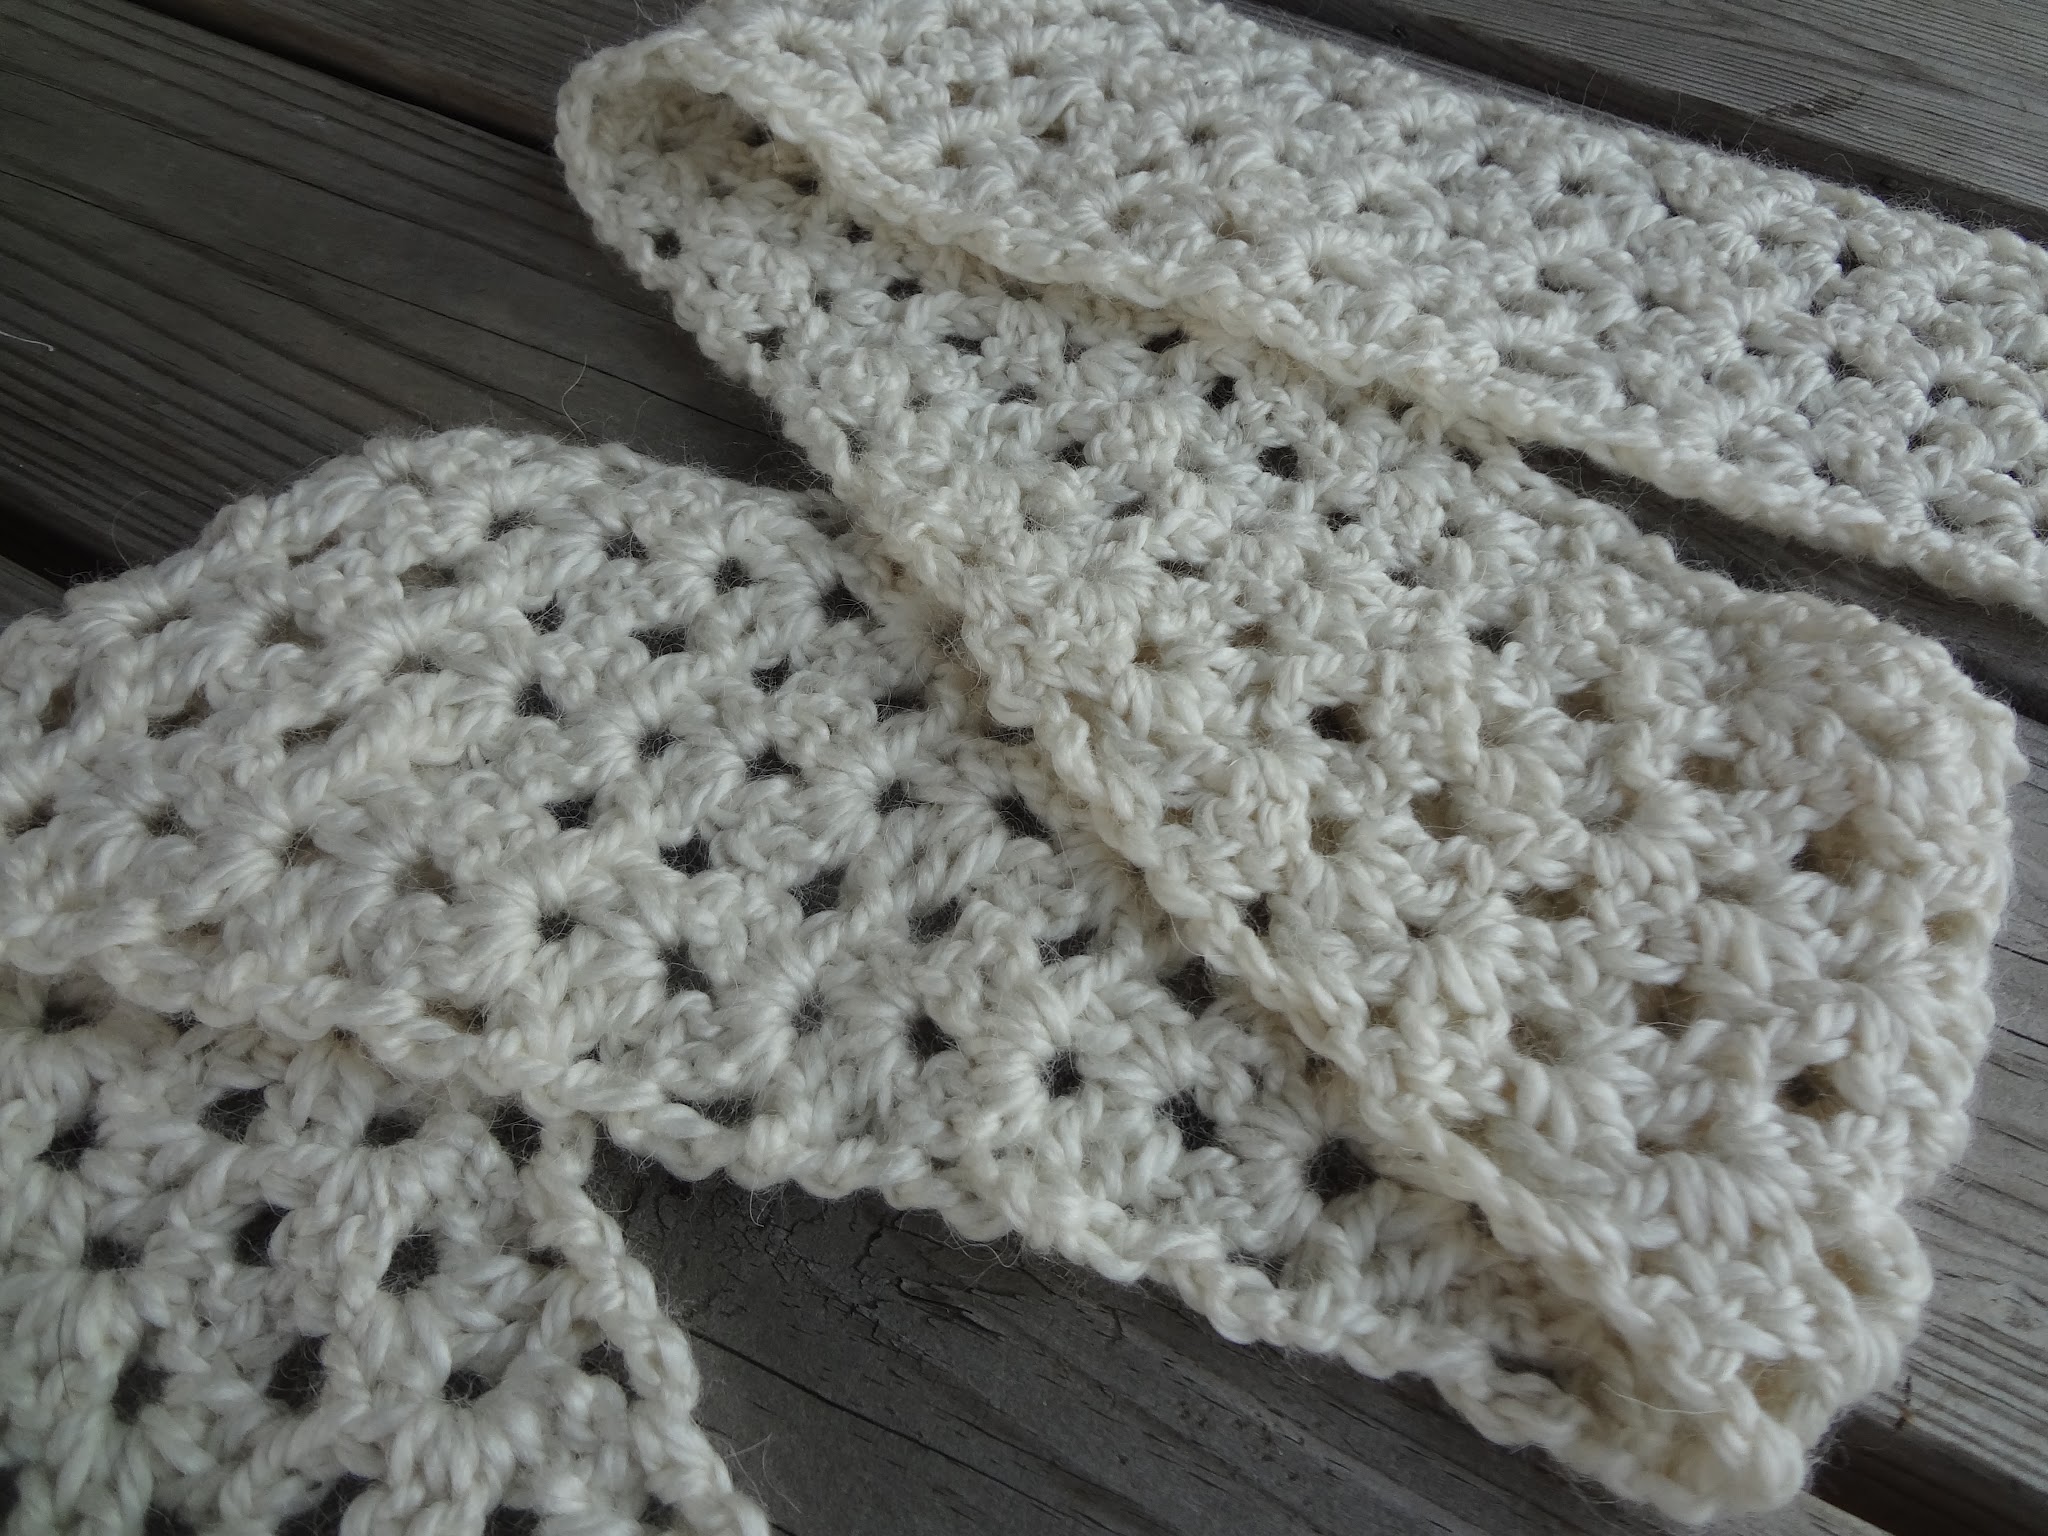 Vanilla Bean Crochet Scarf